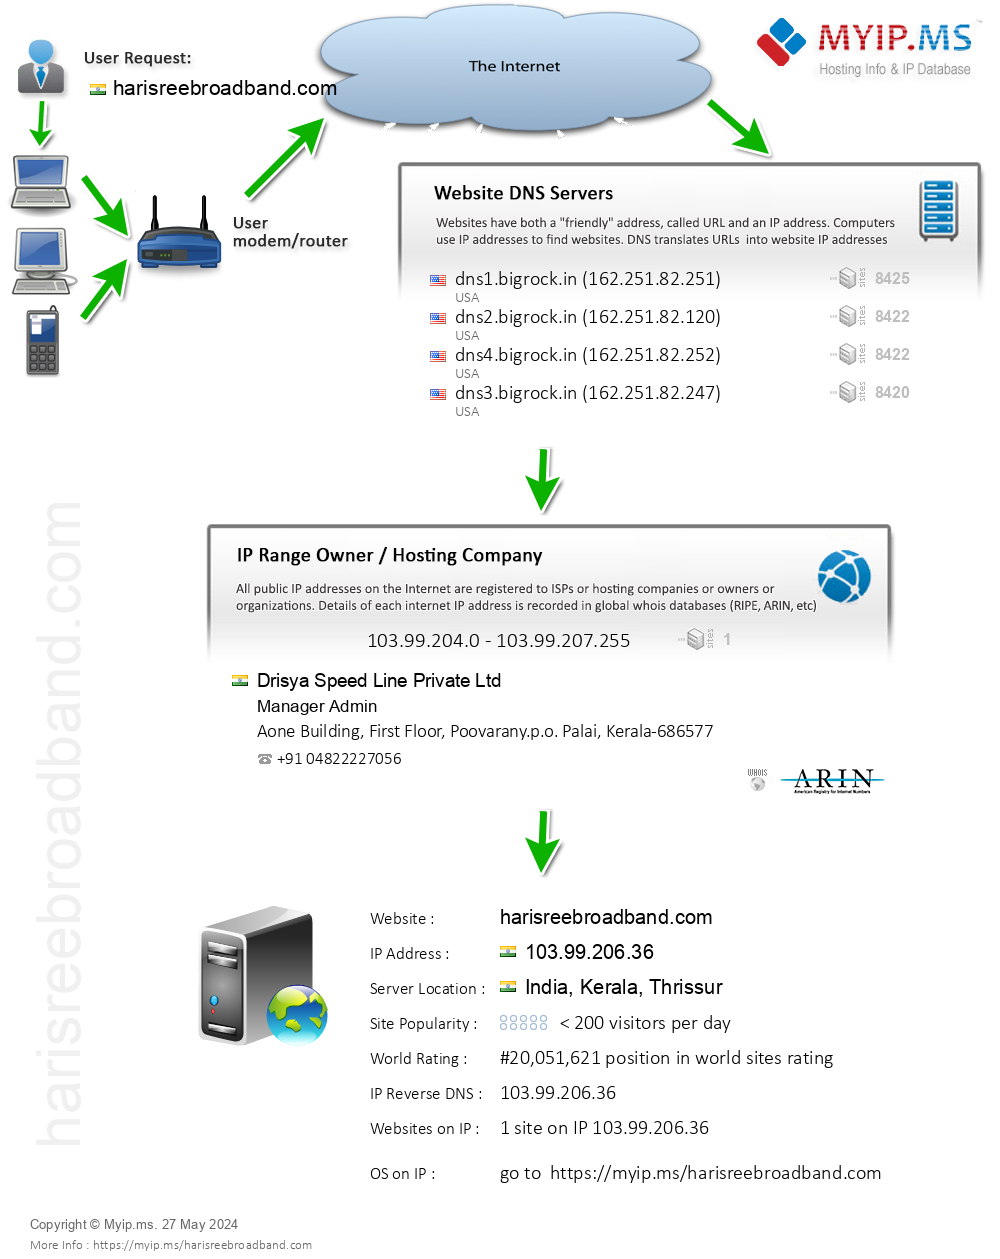 Harisreebroadband.com - Website Hosting Visual IP Diagram